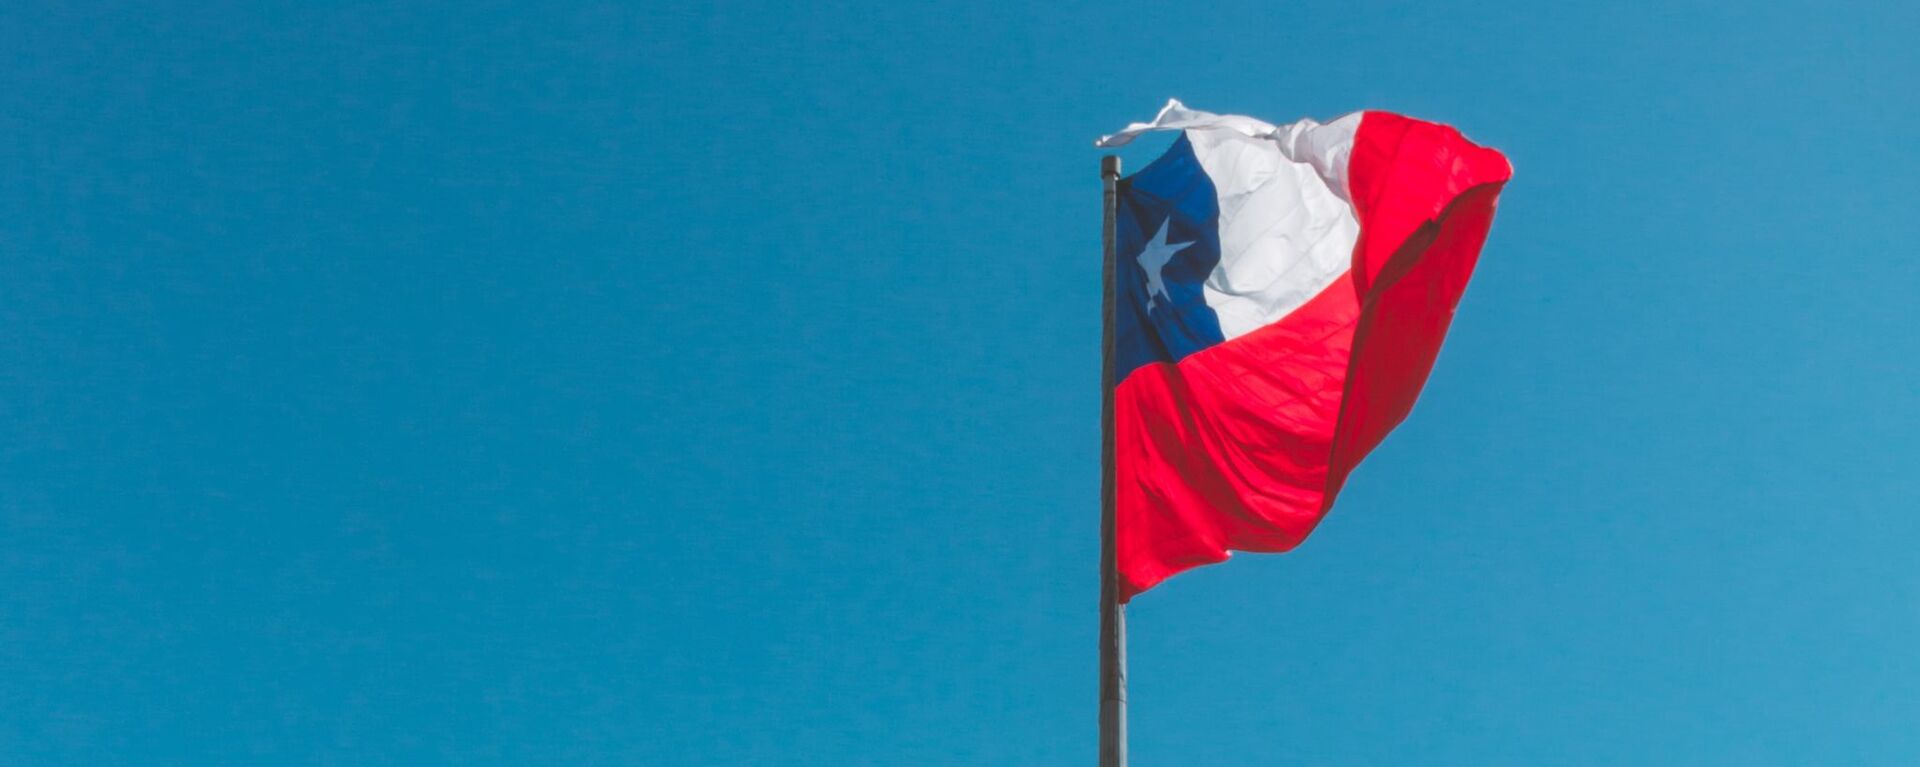 La bandera de Chile - Sputnik Mundo, 1920, 05.05.2021